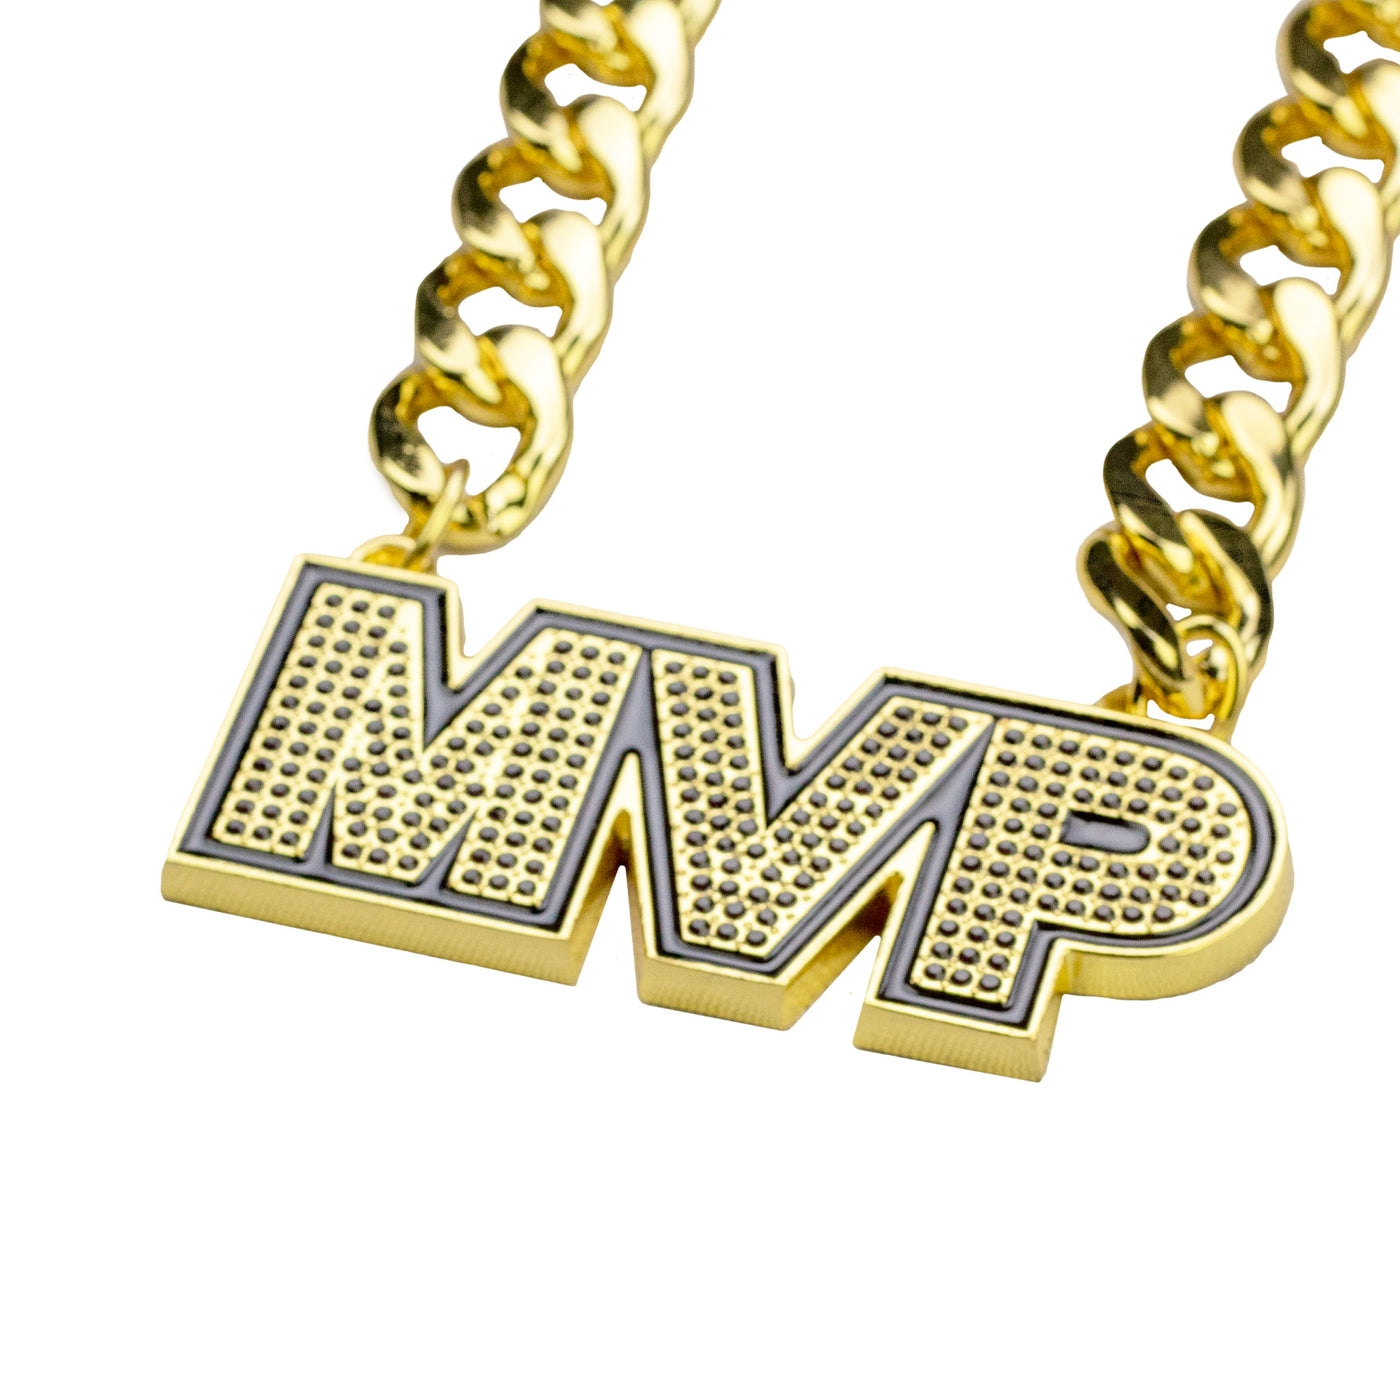 MVP STONE CHAIN GOLD/PURPLE